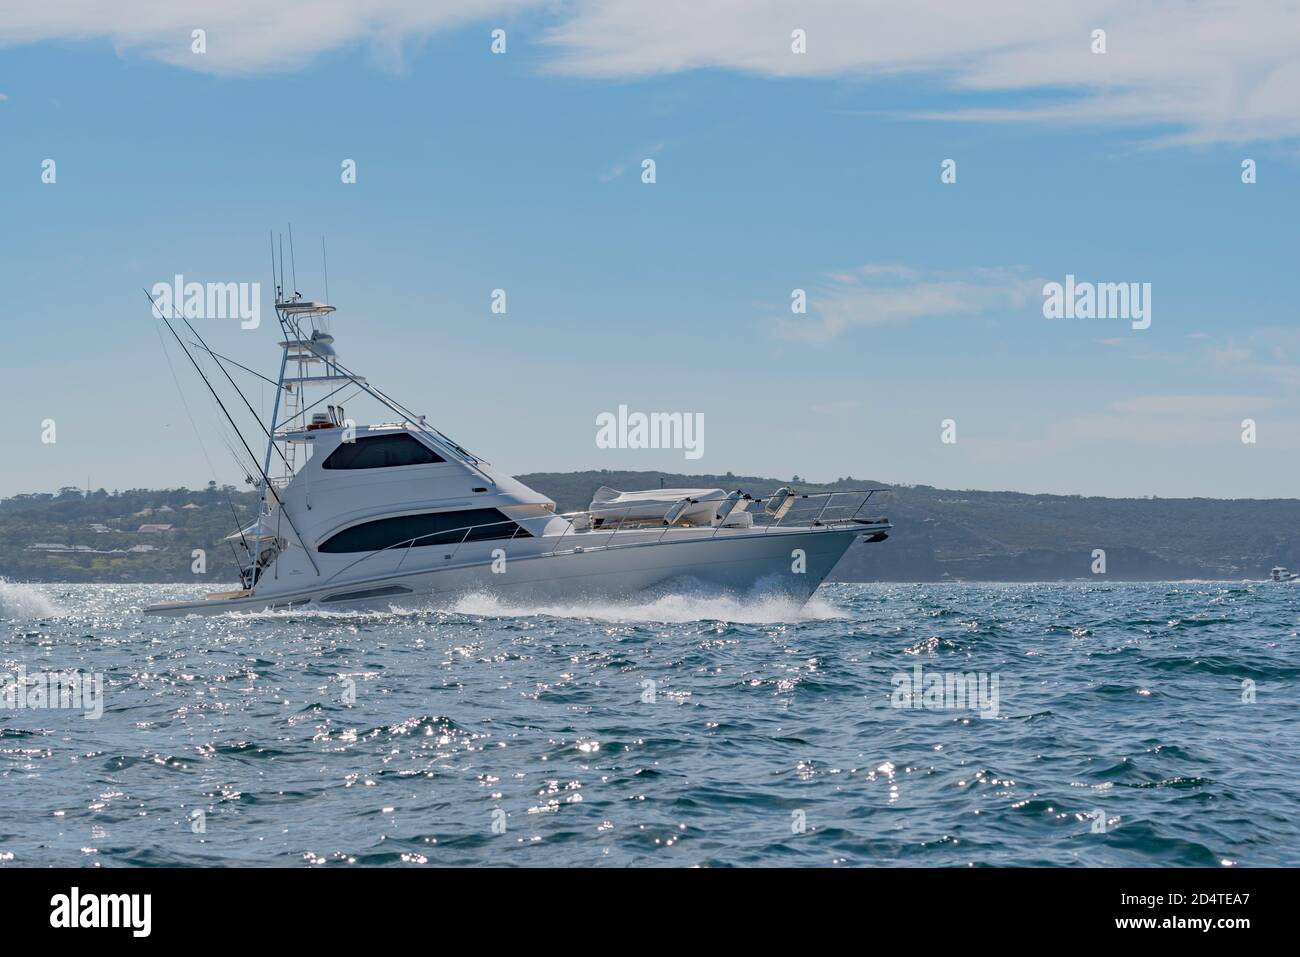 A salt water deep sea fishing charter boat in slightly choppy water on Sydney Harbour, Australia Stock Photo